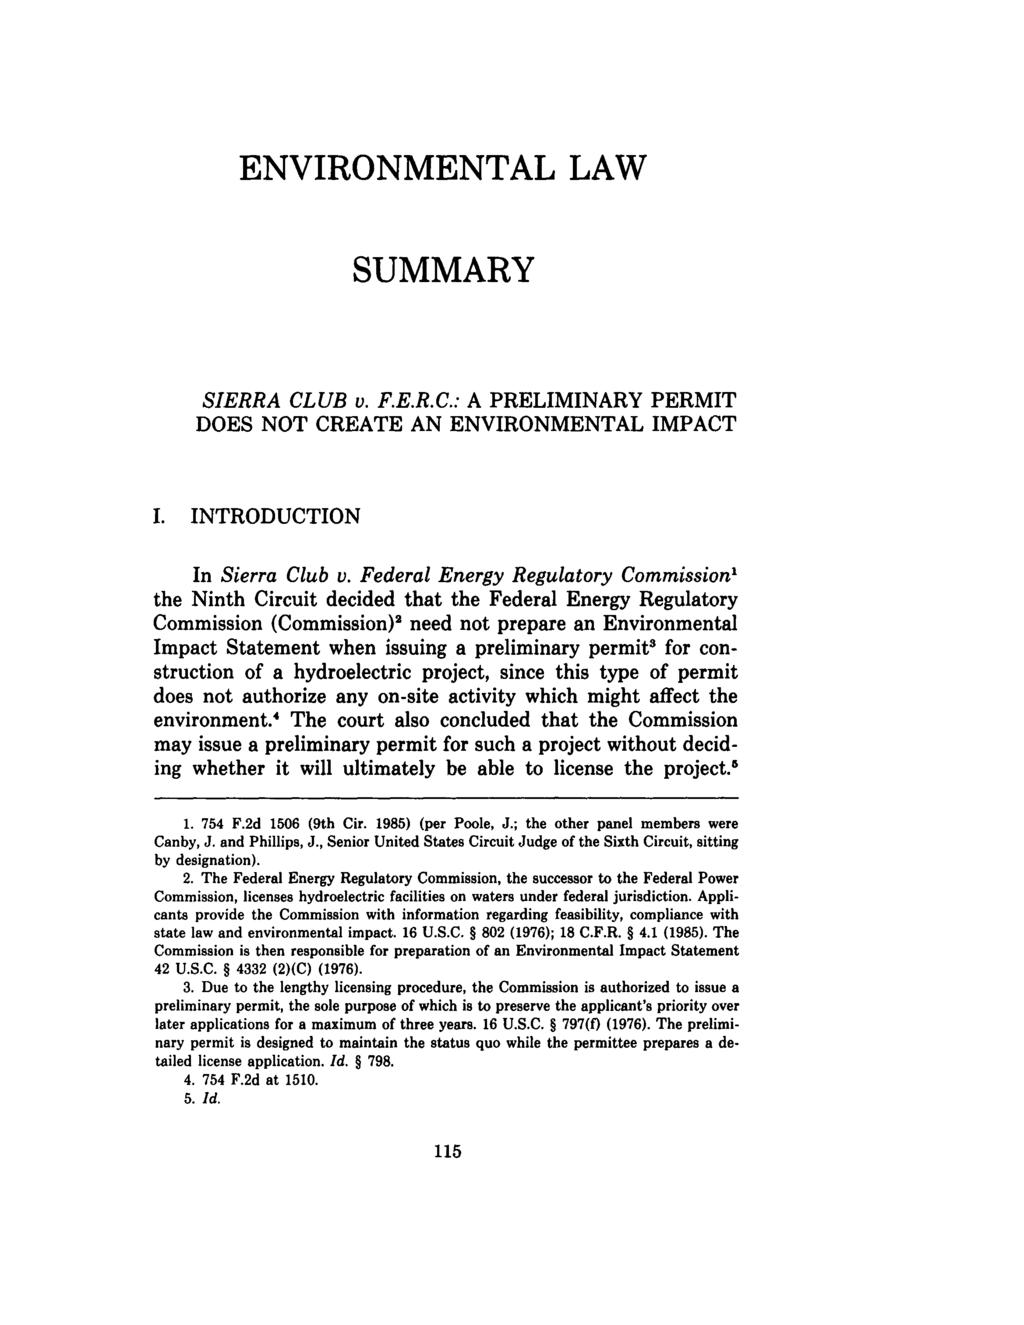 White and Williams: Environmental Law ENVIRONMENTAL LAW SUMMARY SIERRA CLUB v. F.E.R.C.: A PRELIMINARY PERMIT DOES NOT CREATE AN ENVIRONMENTAL IMPACT I. INTRODUCTION In Sierra Club v.